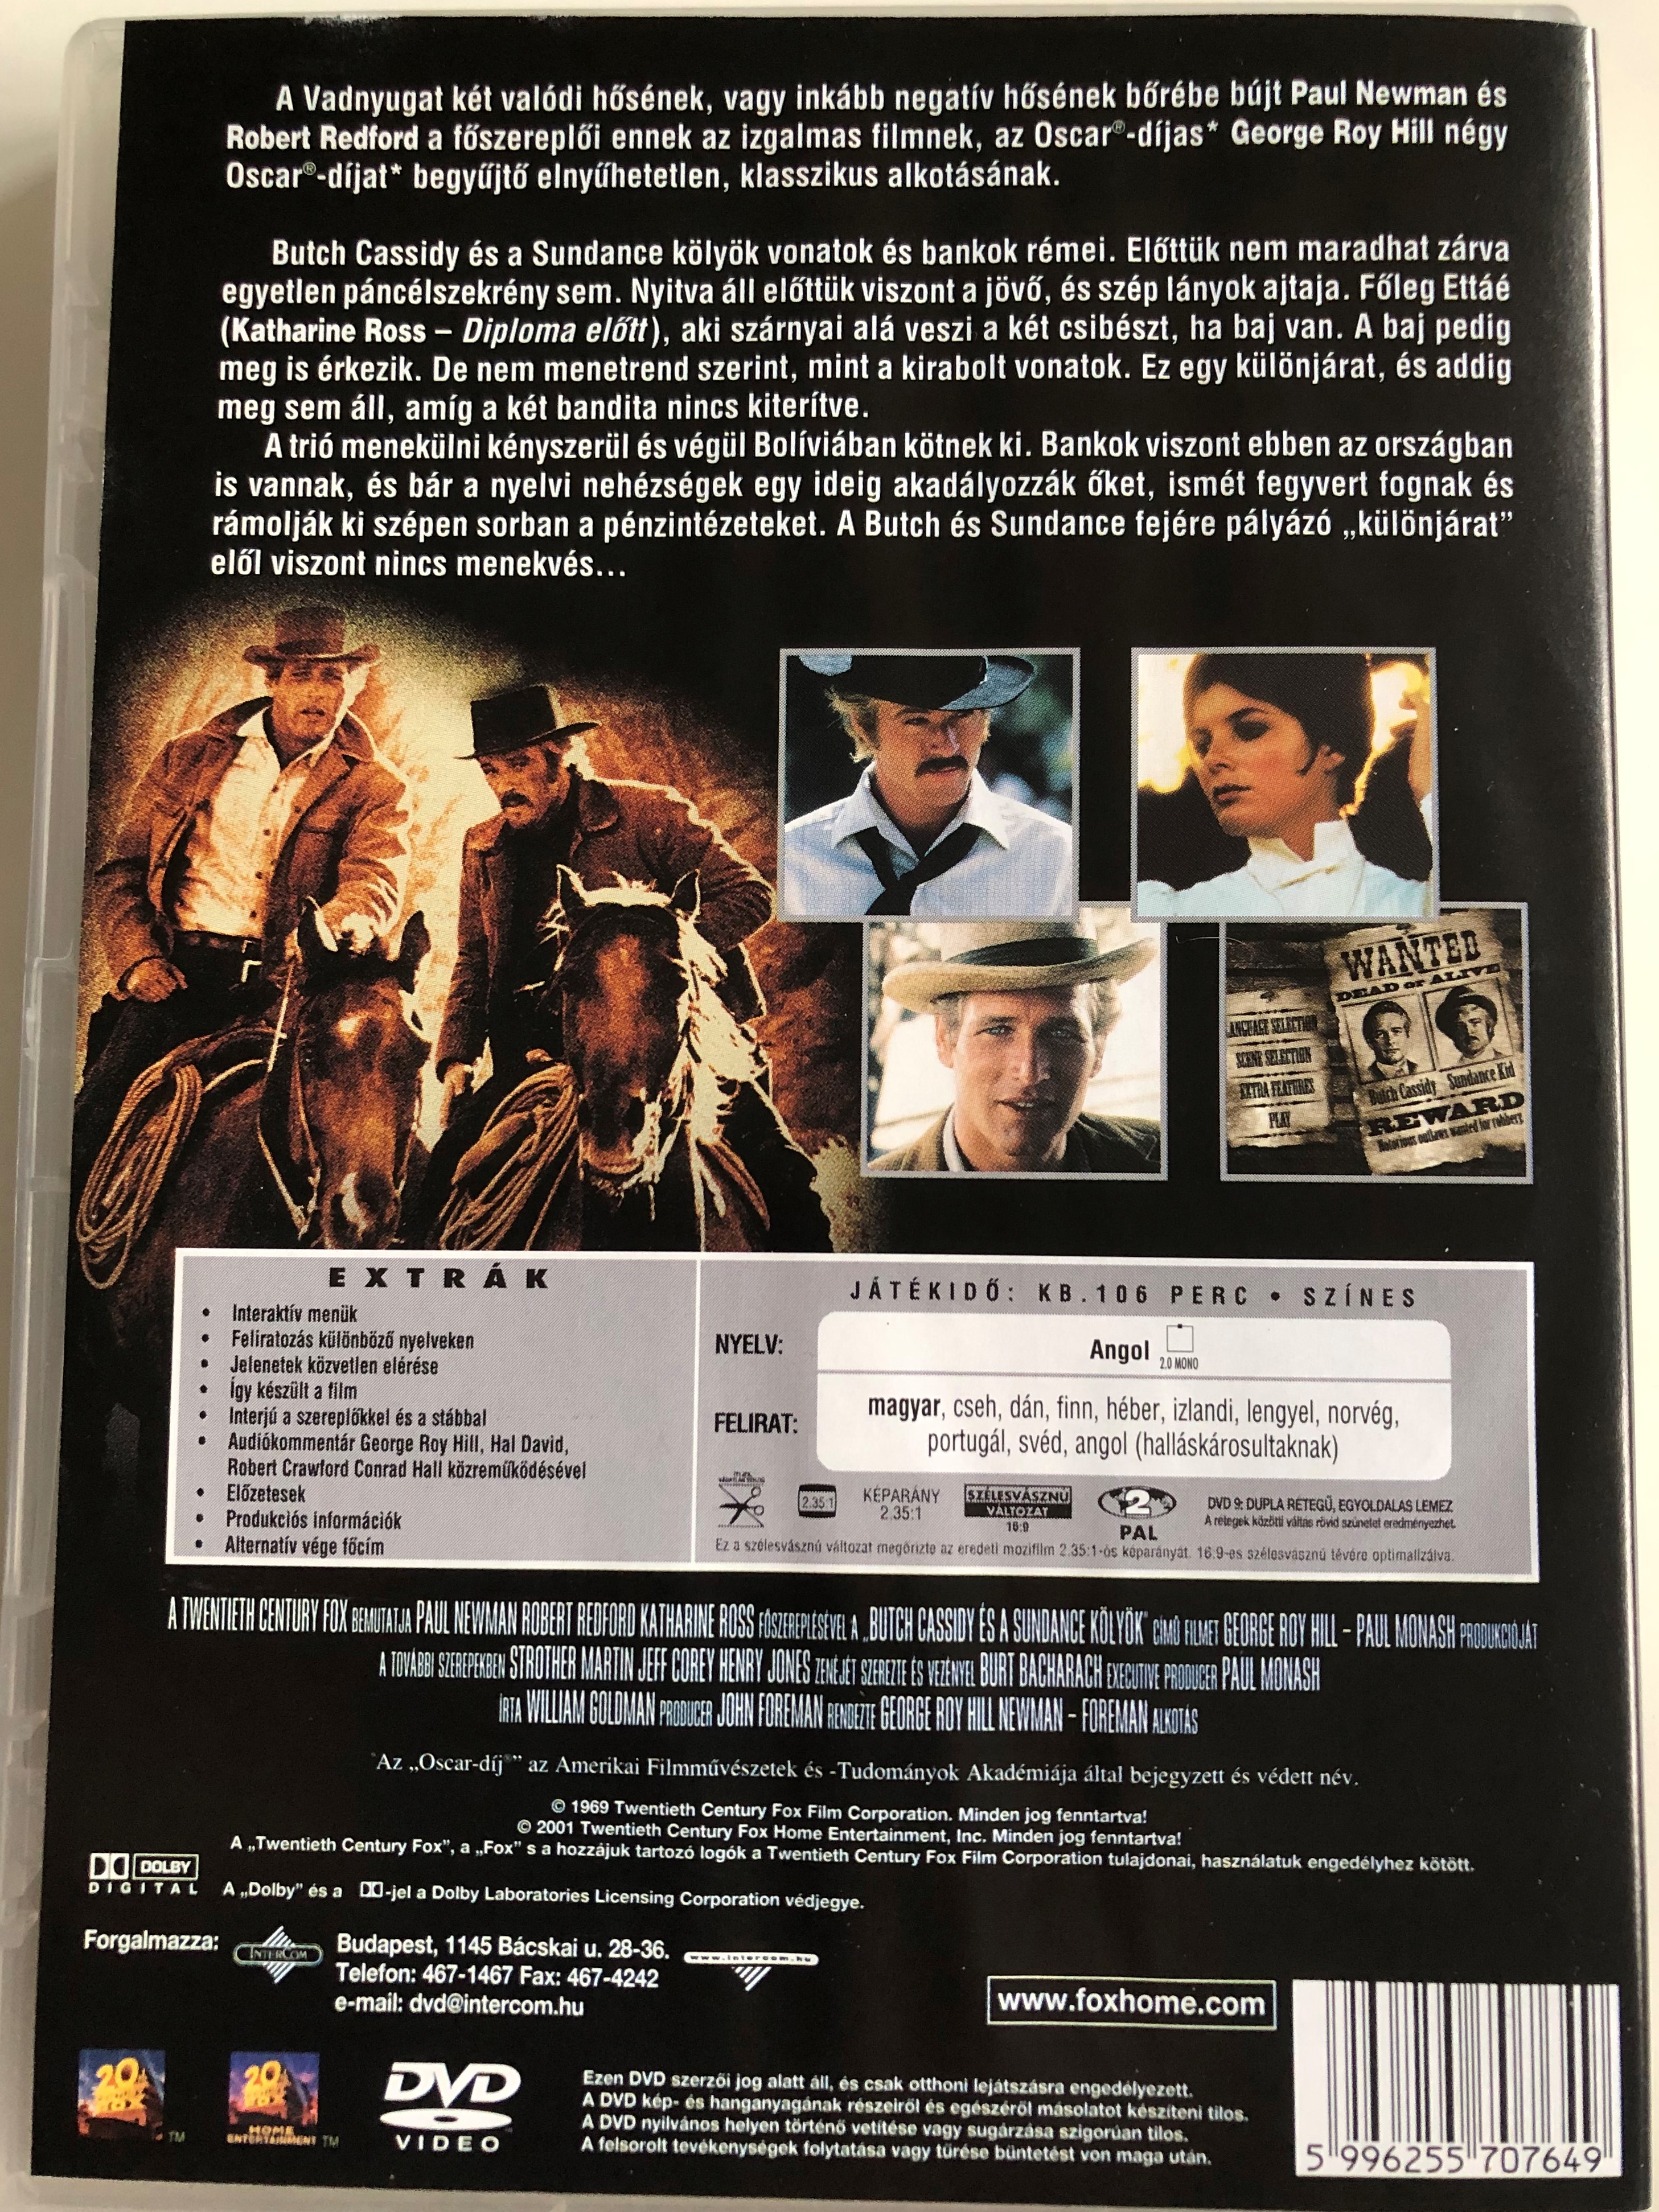 Butch Cassidy and the Sundance Kid DVD 1969 Butch Cassidy és a Sundance  kölyök / Directed by George Roy, Hill Newman - Bible in My Language